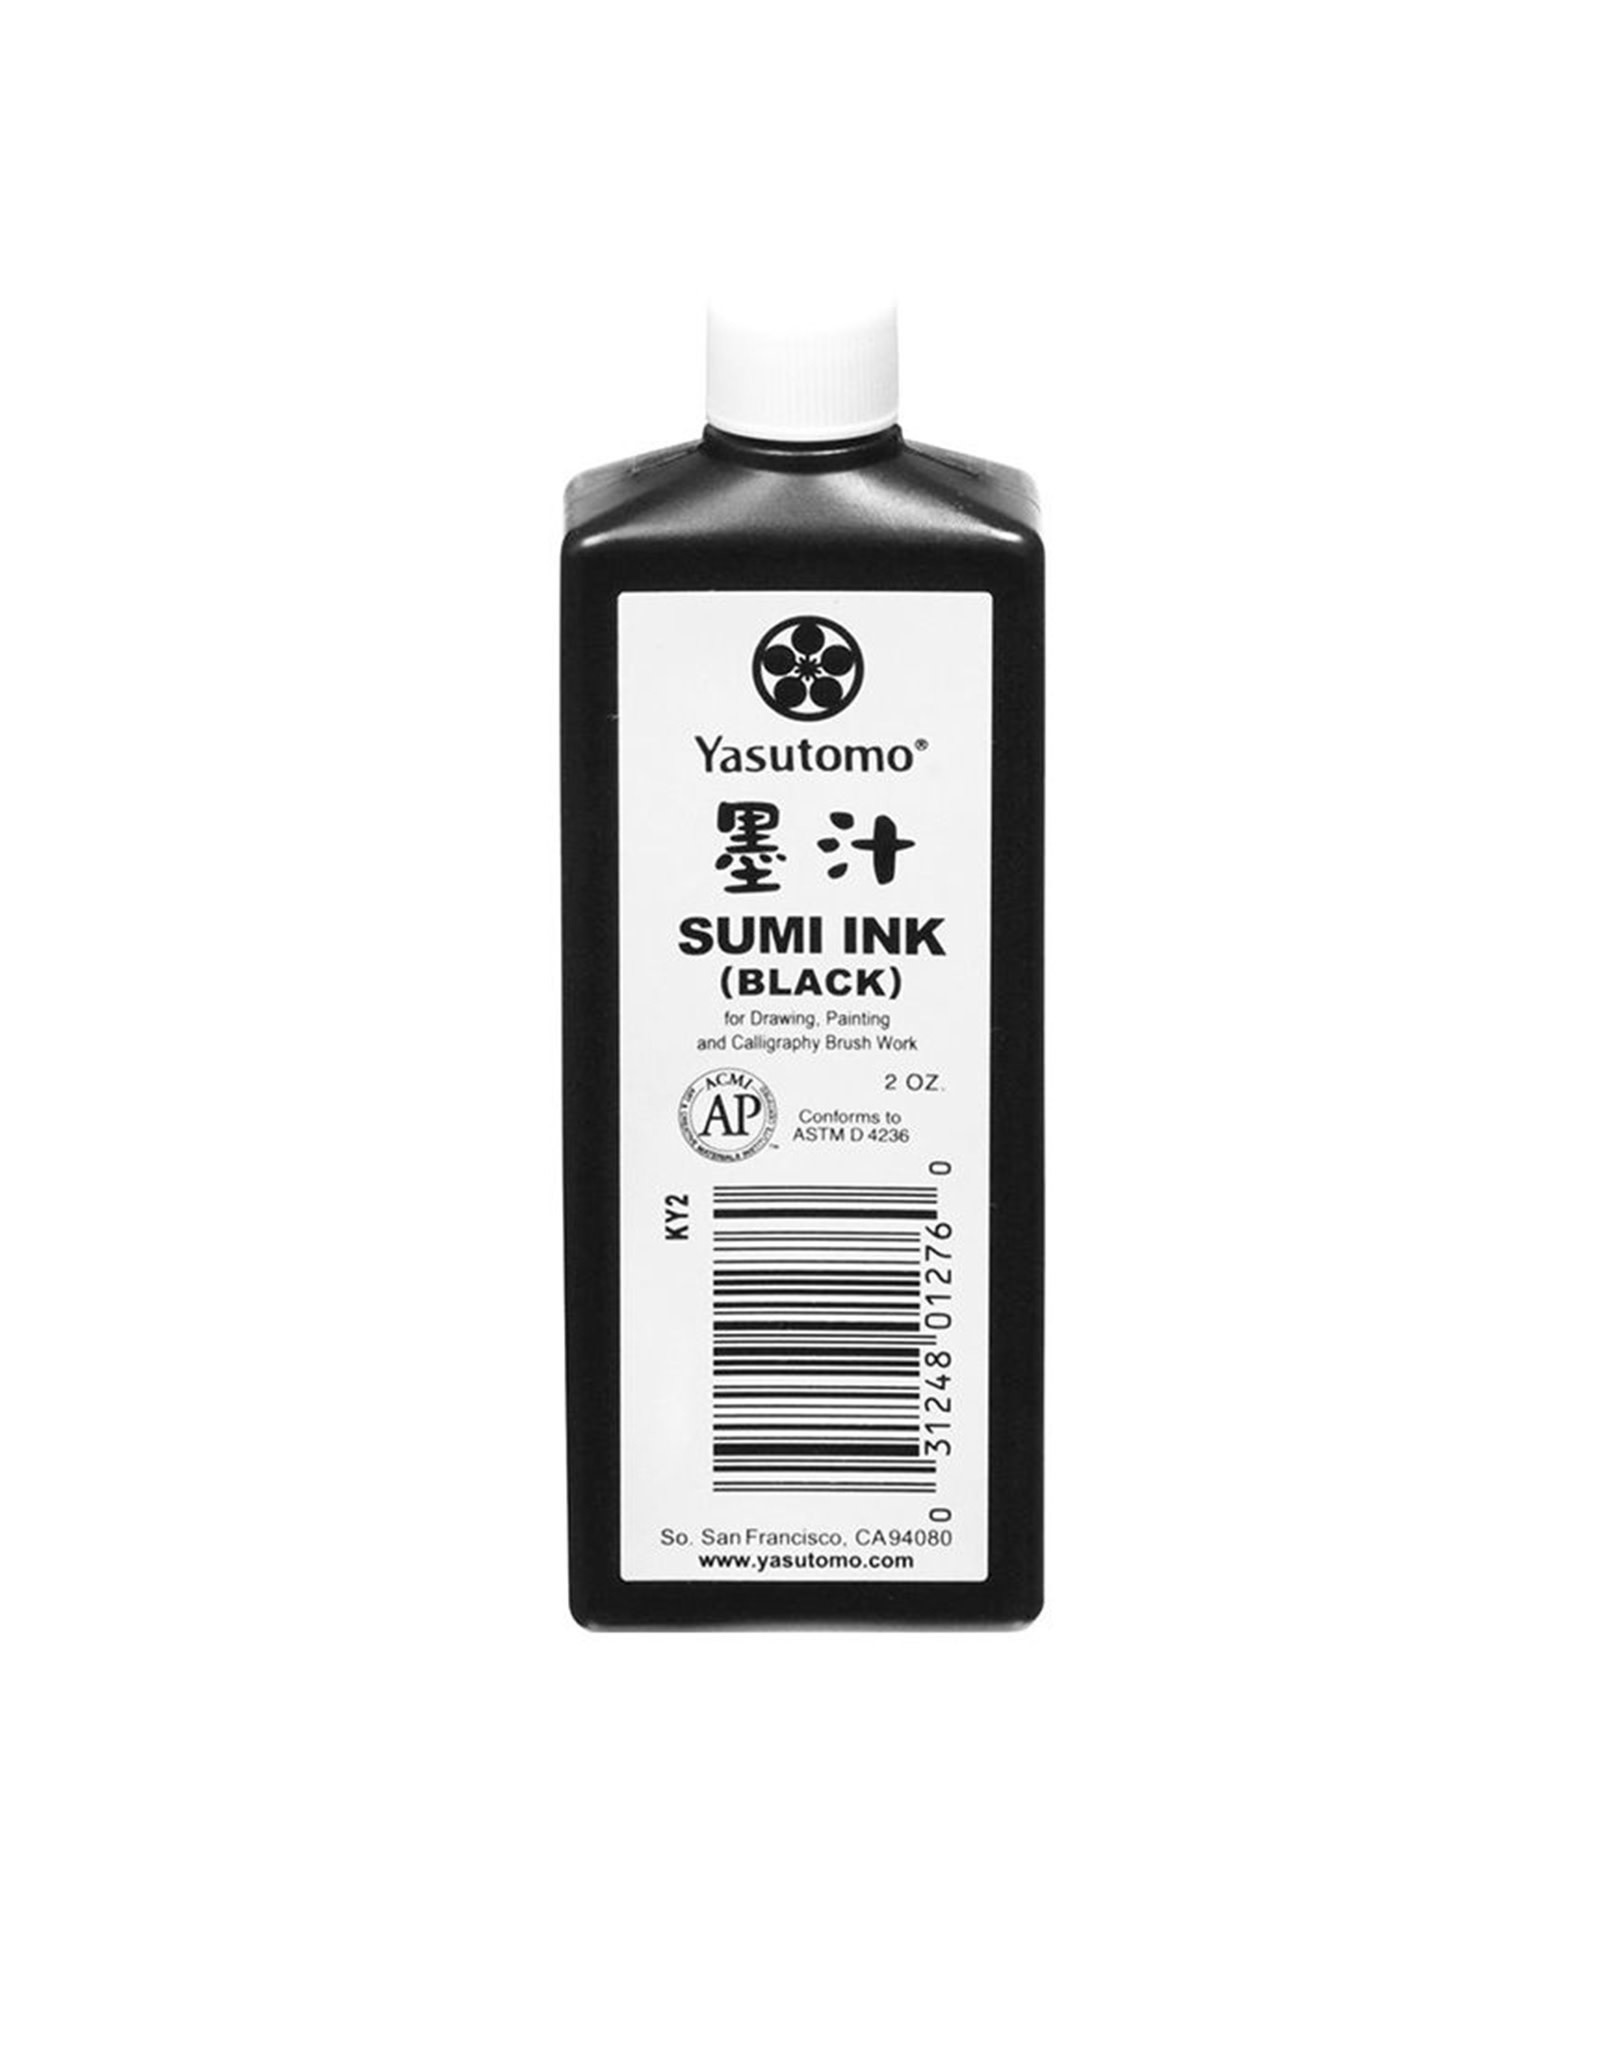 YASUTOMO Yasutomo liquid Sumi Ink, Black 2oz